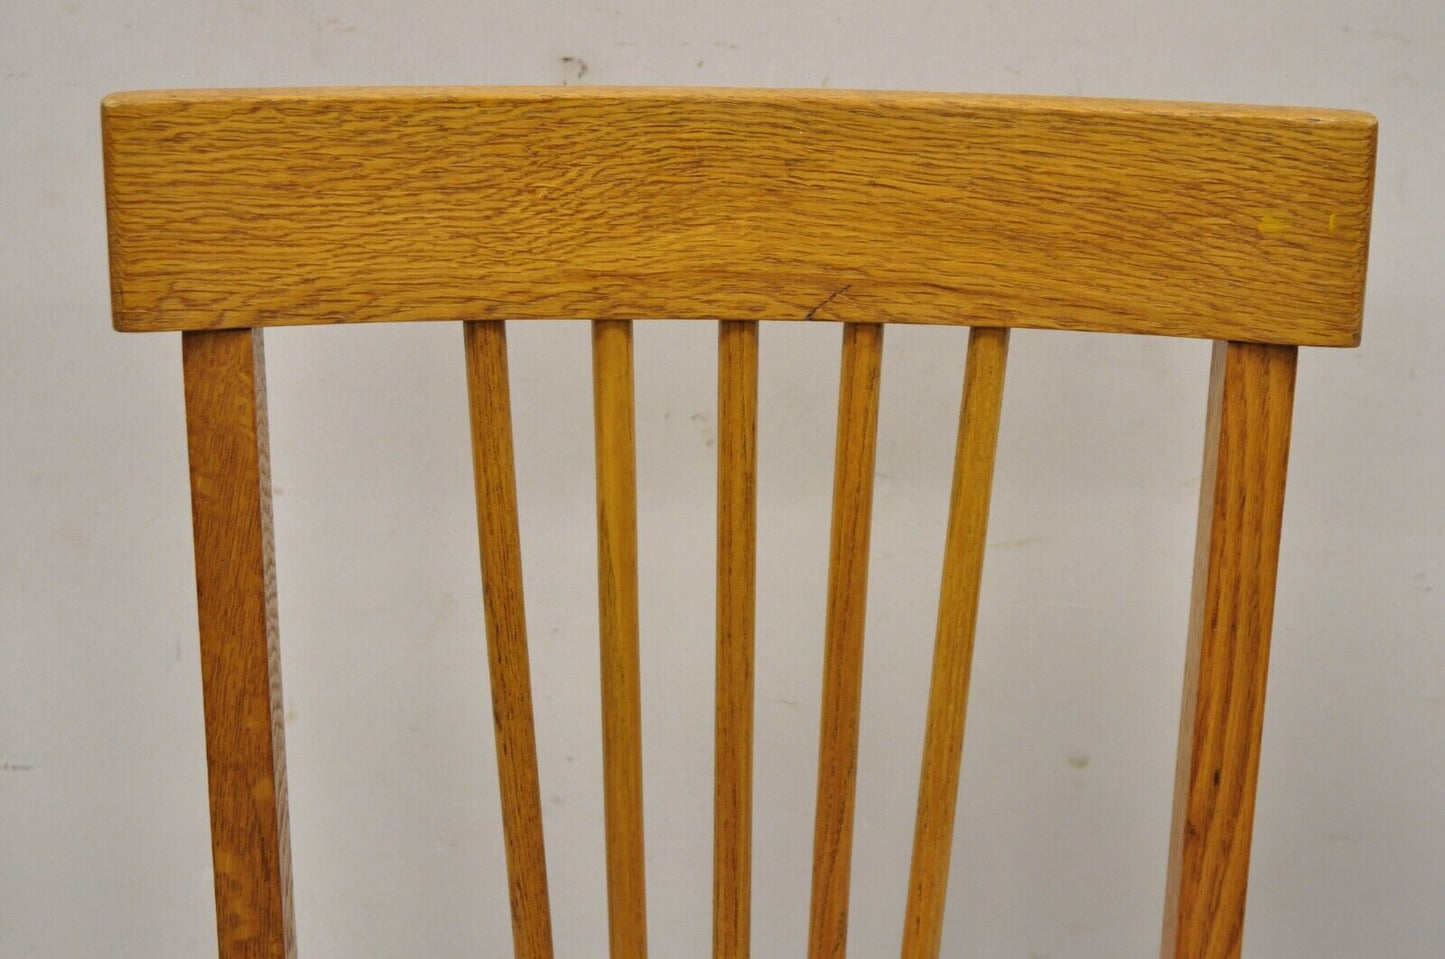 Vintage Mission Arts & Crafts Oak Wood Child’s School Desk Chair